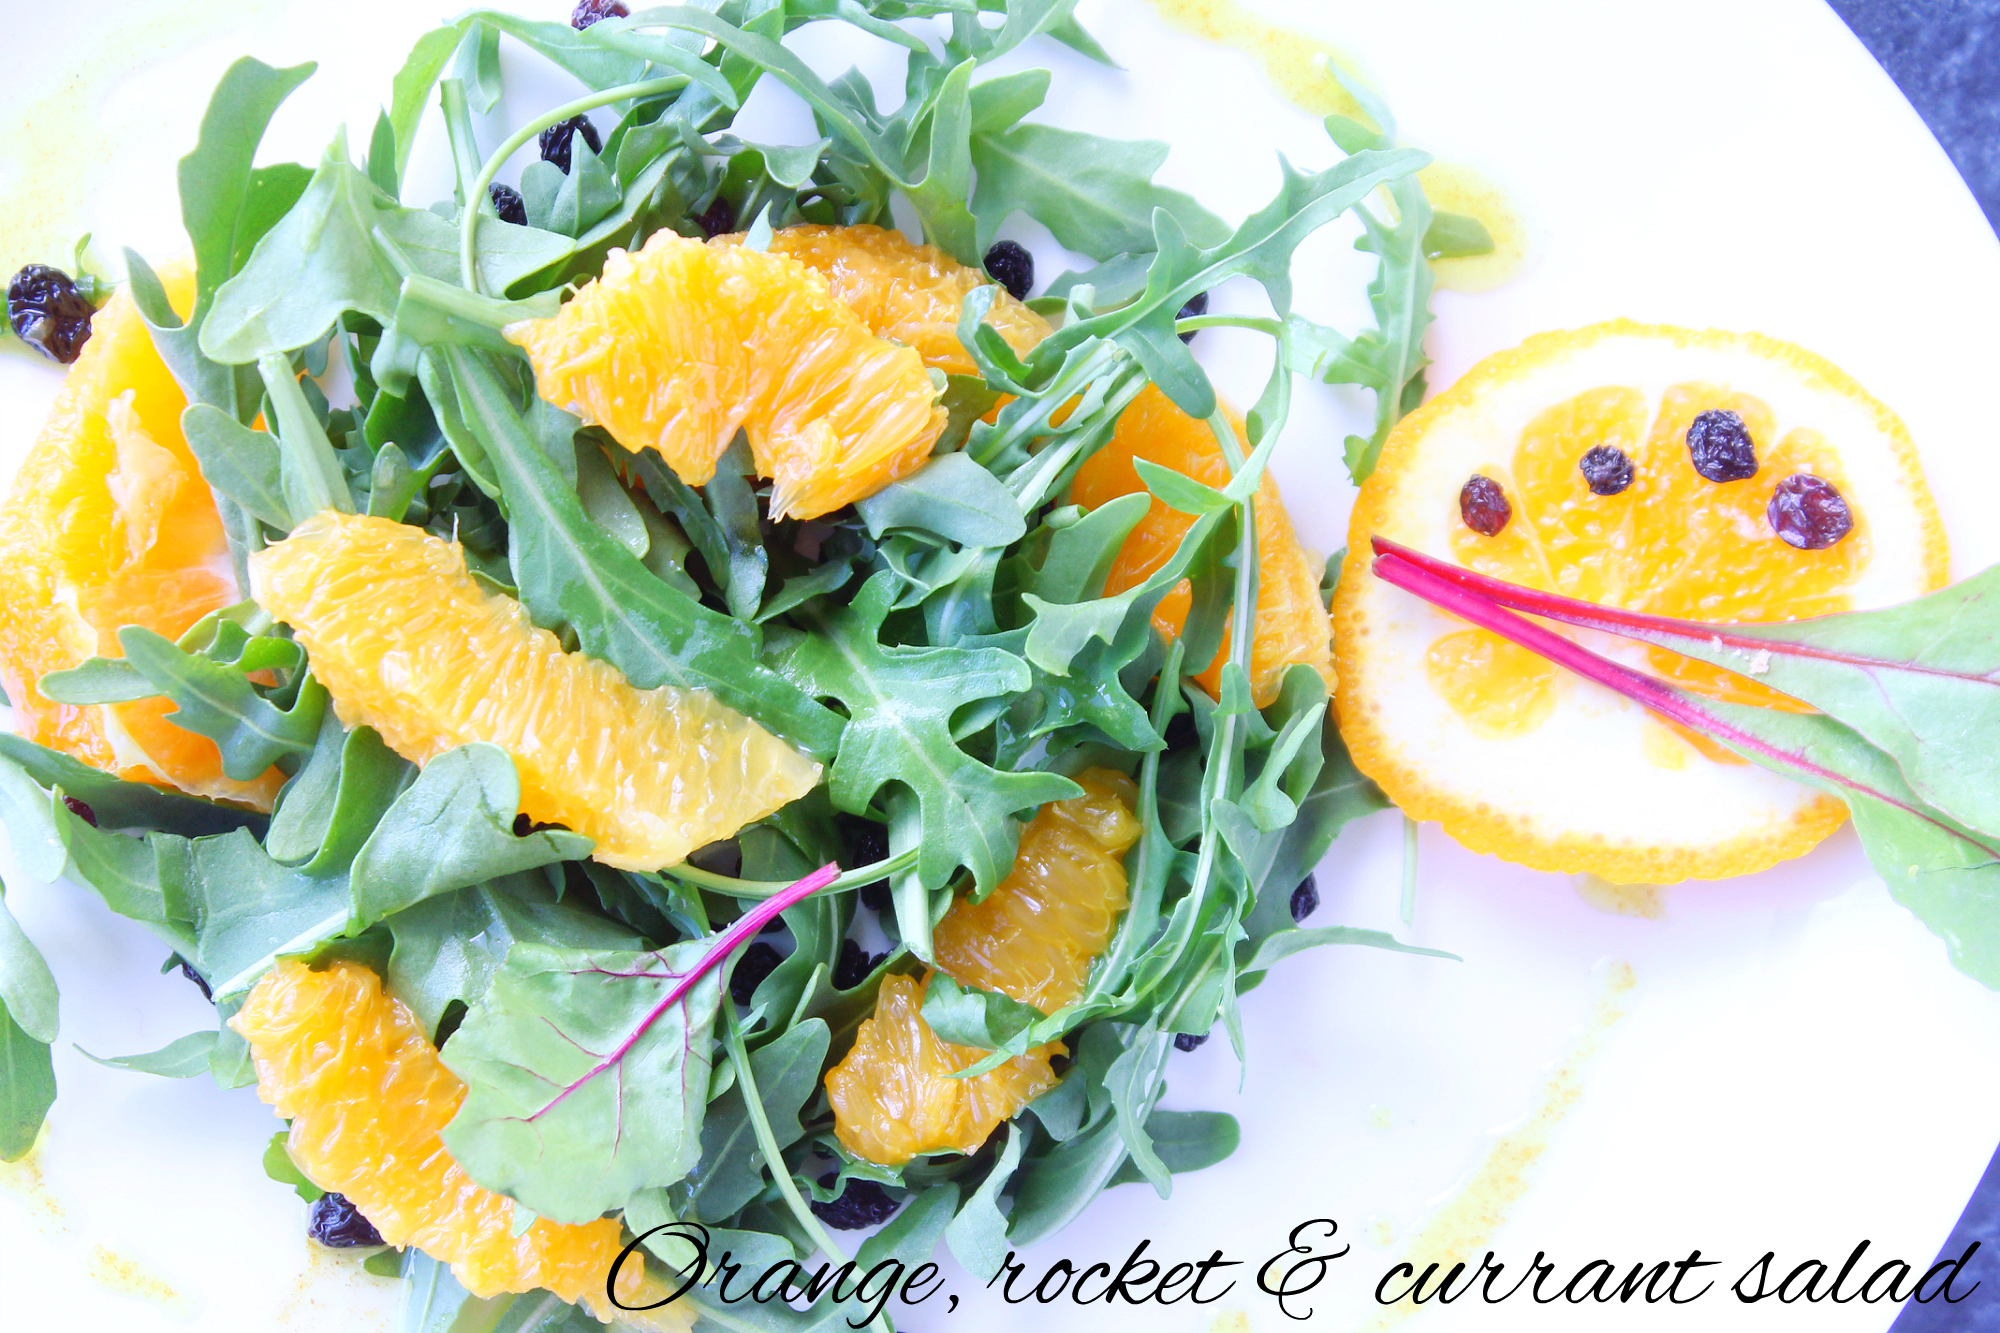 Orange, rocket and currant salad